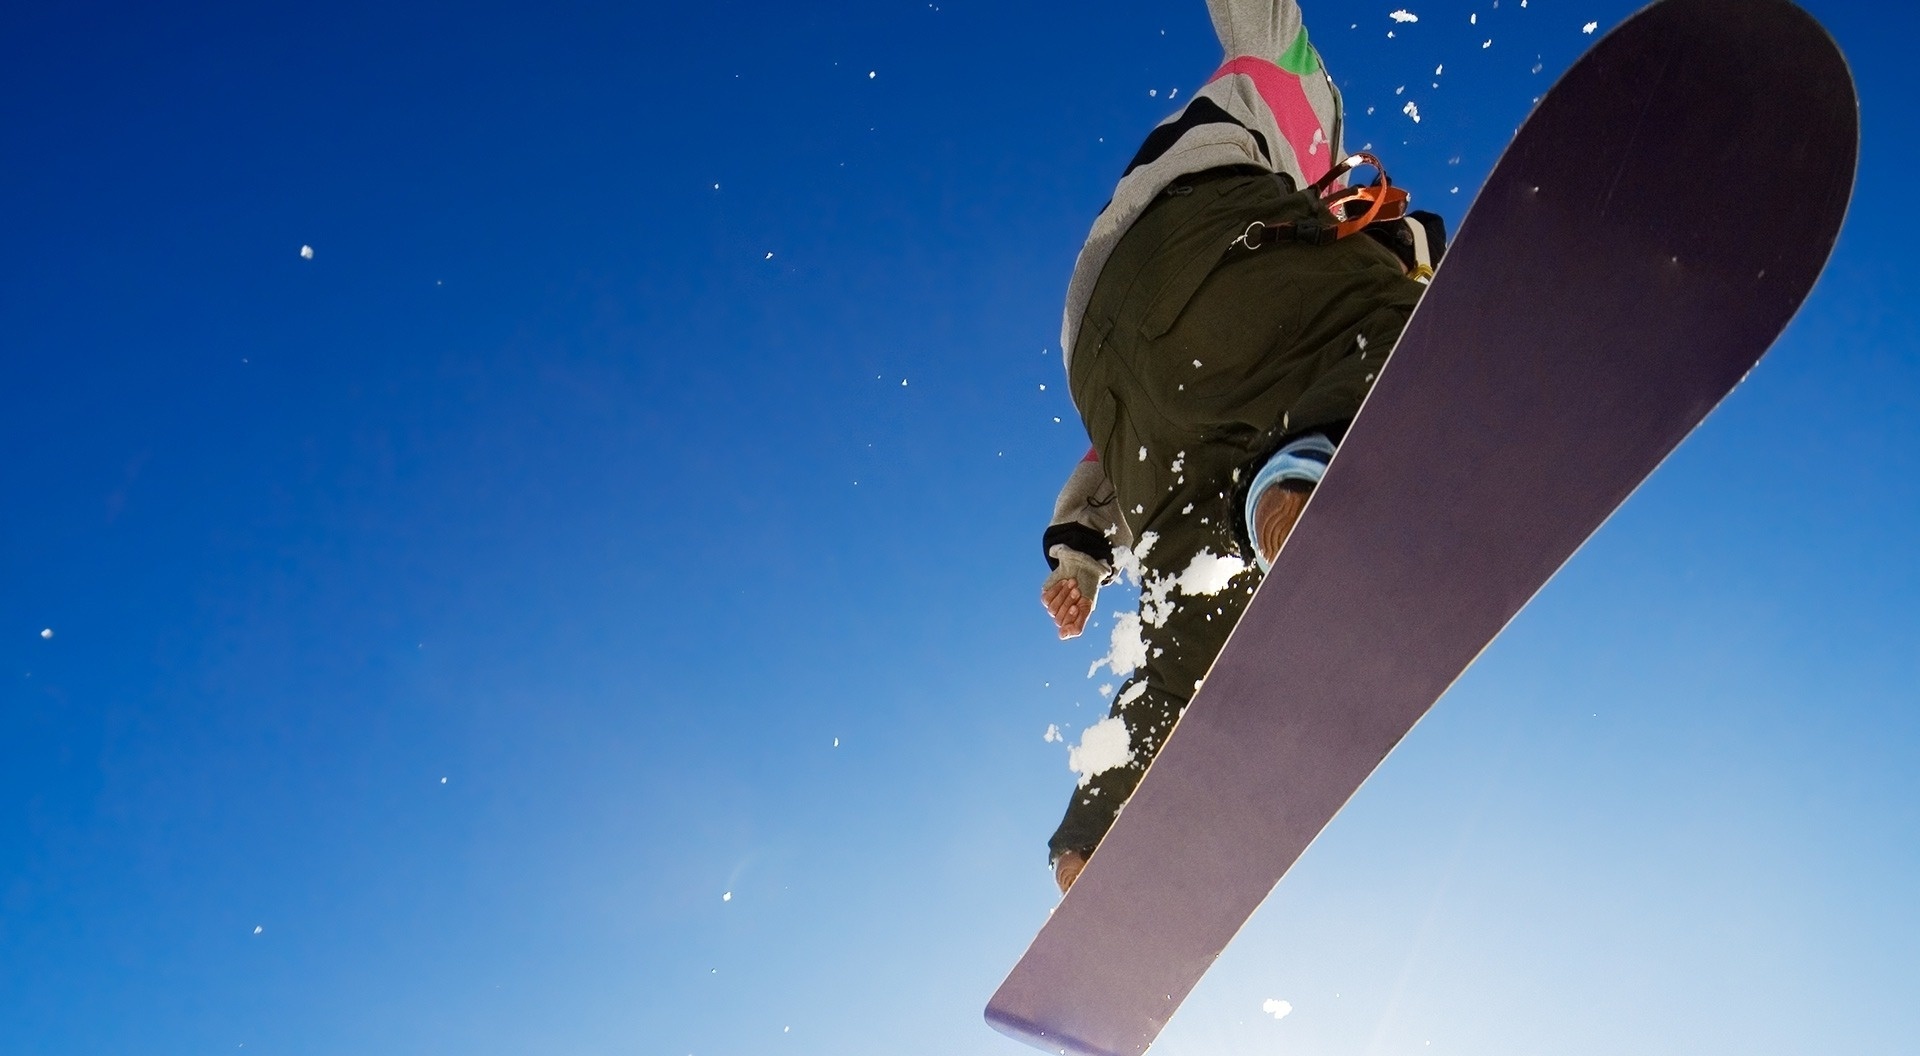 Snowboarding  Free Stock Photos